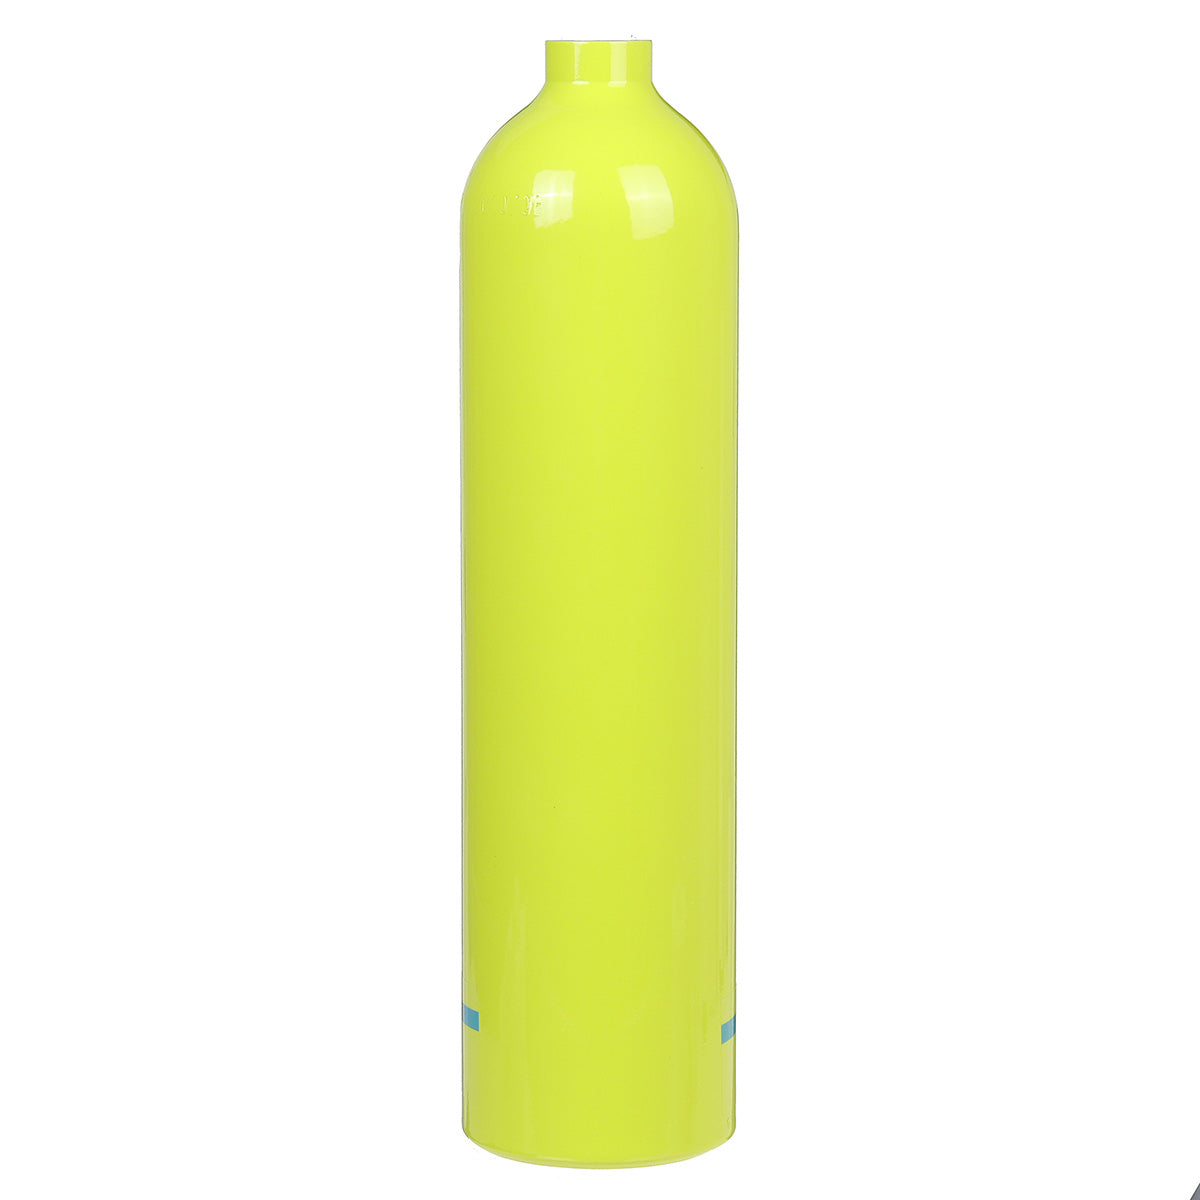 Green Yellow 1L Scuba Oxygen Cylinder Air Tank Underwater Glassess Breathing Equipment Set